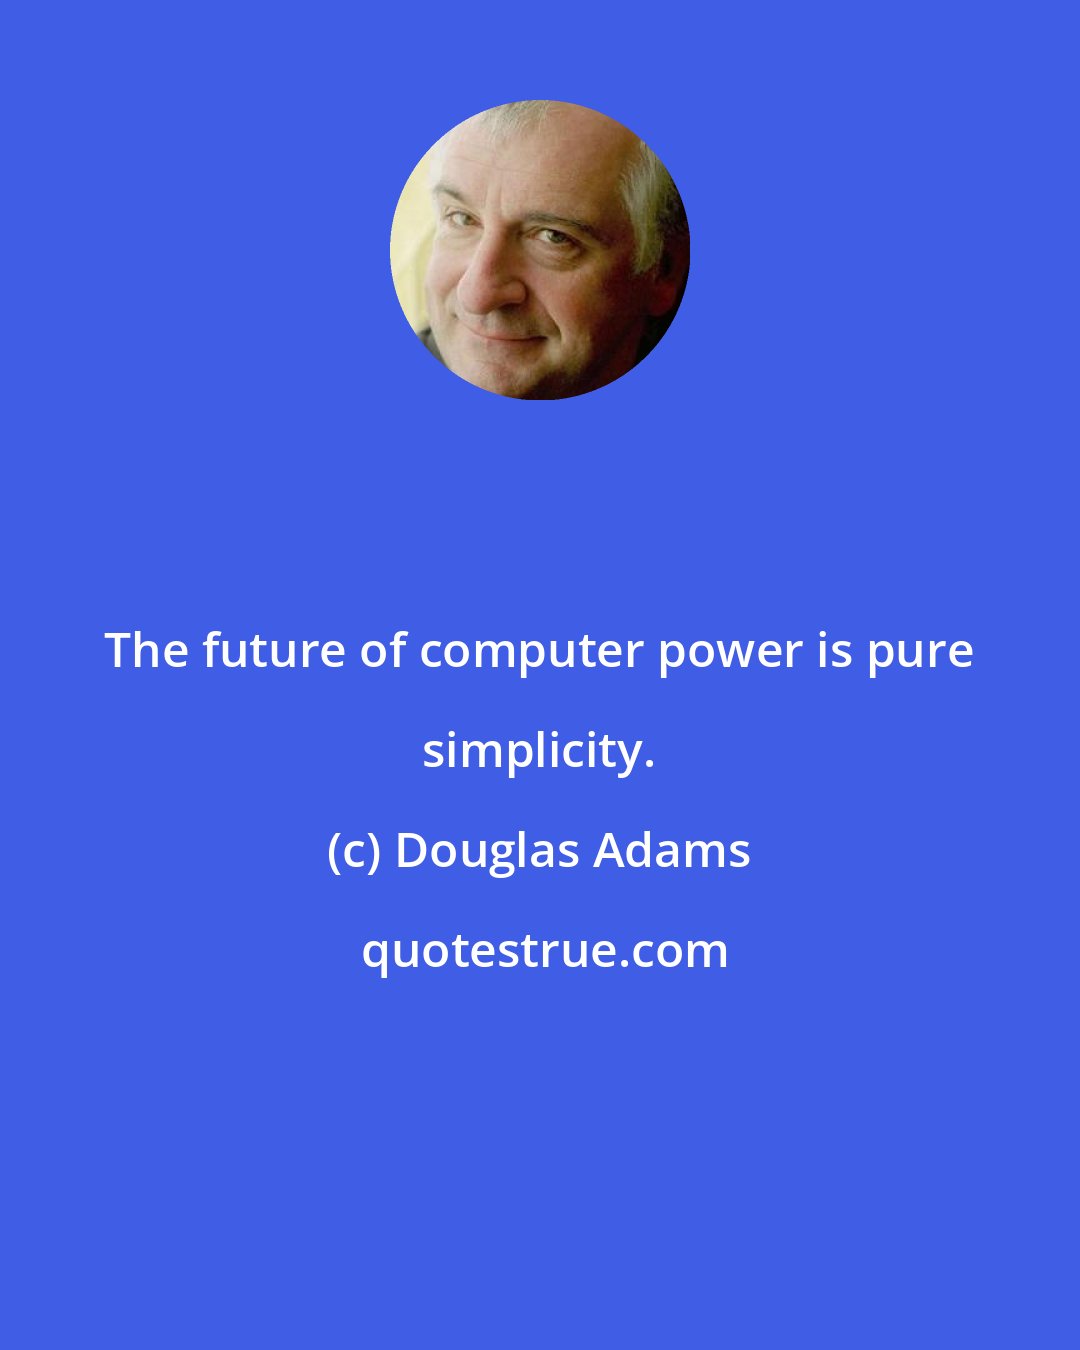 Douglas Adams: The future of computer power is pure simplicity.